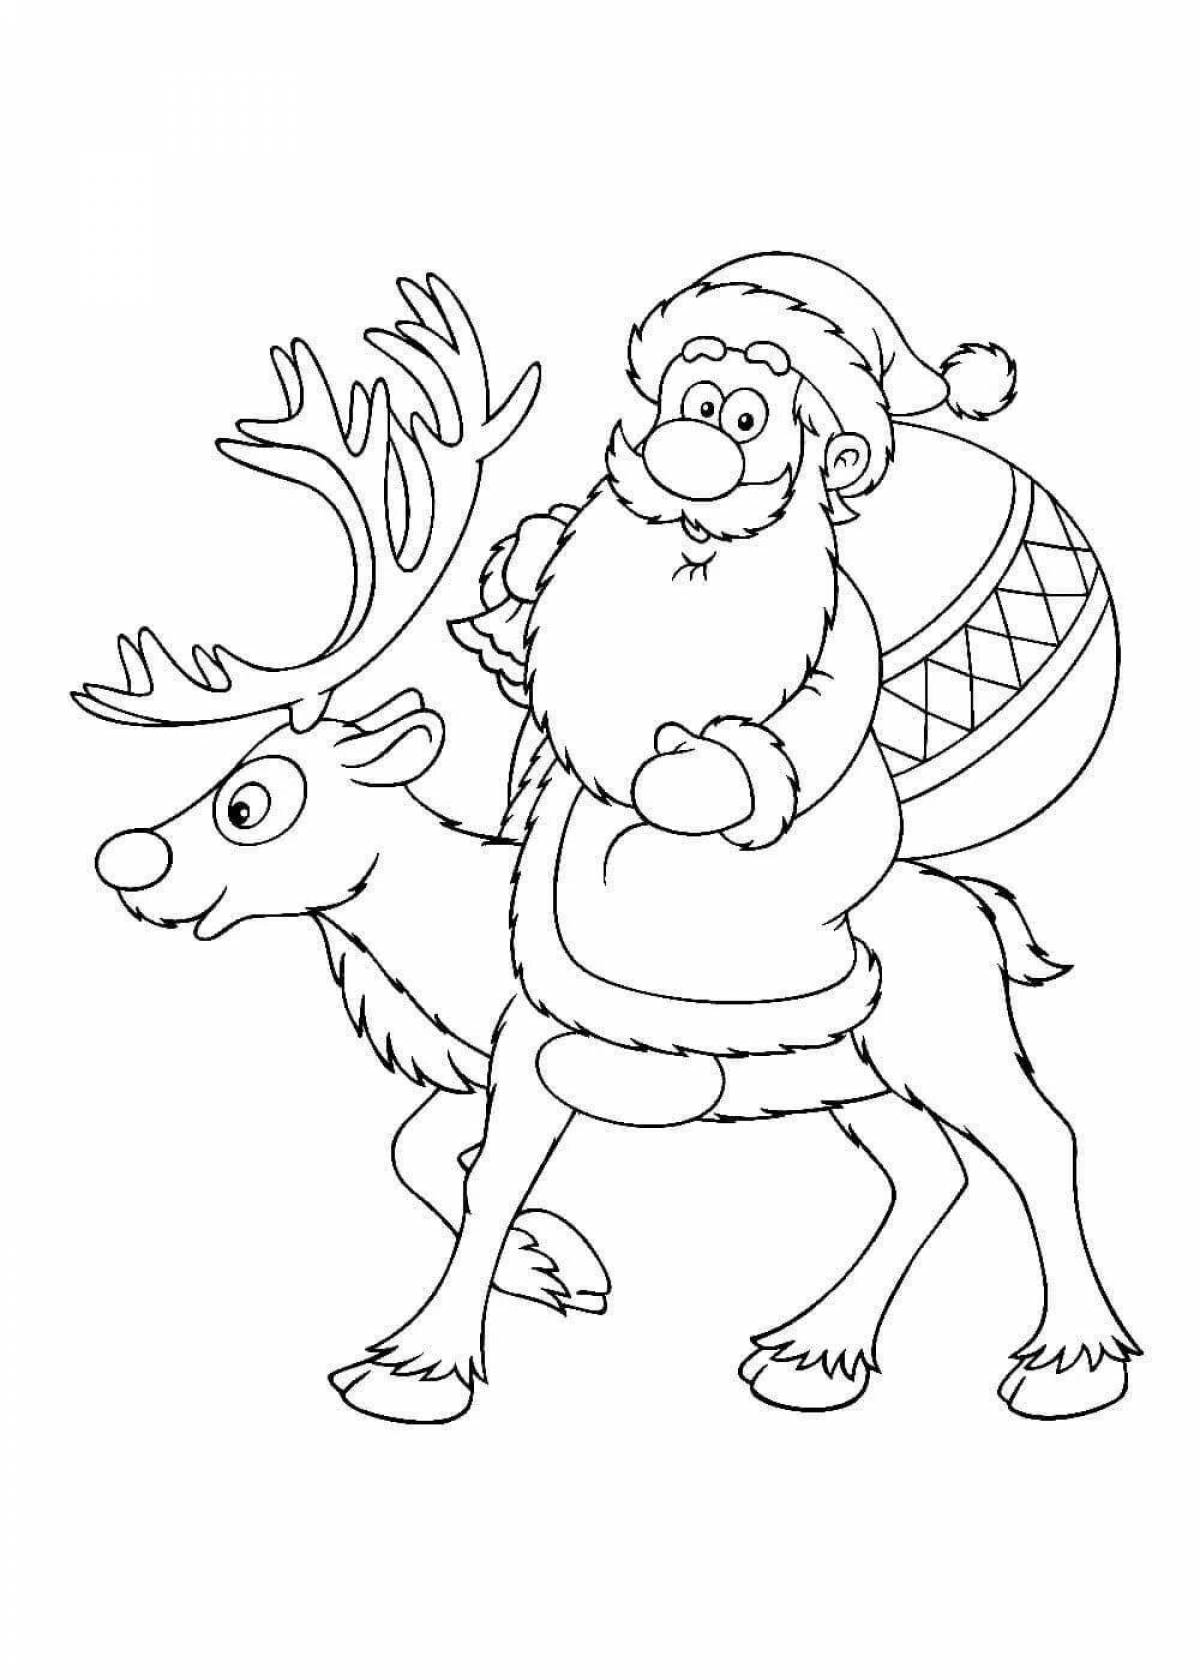 Glowing santa claus and reindeer coloring page